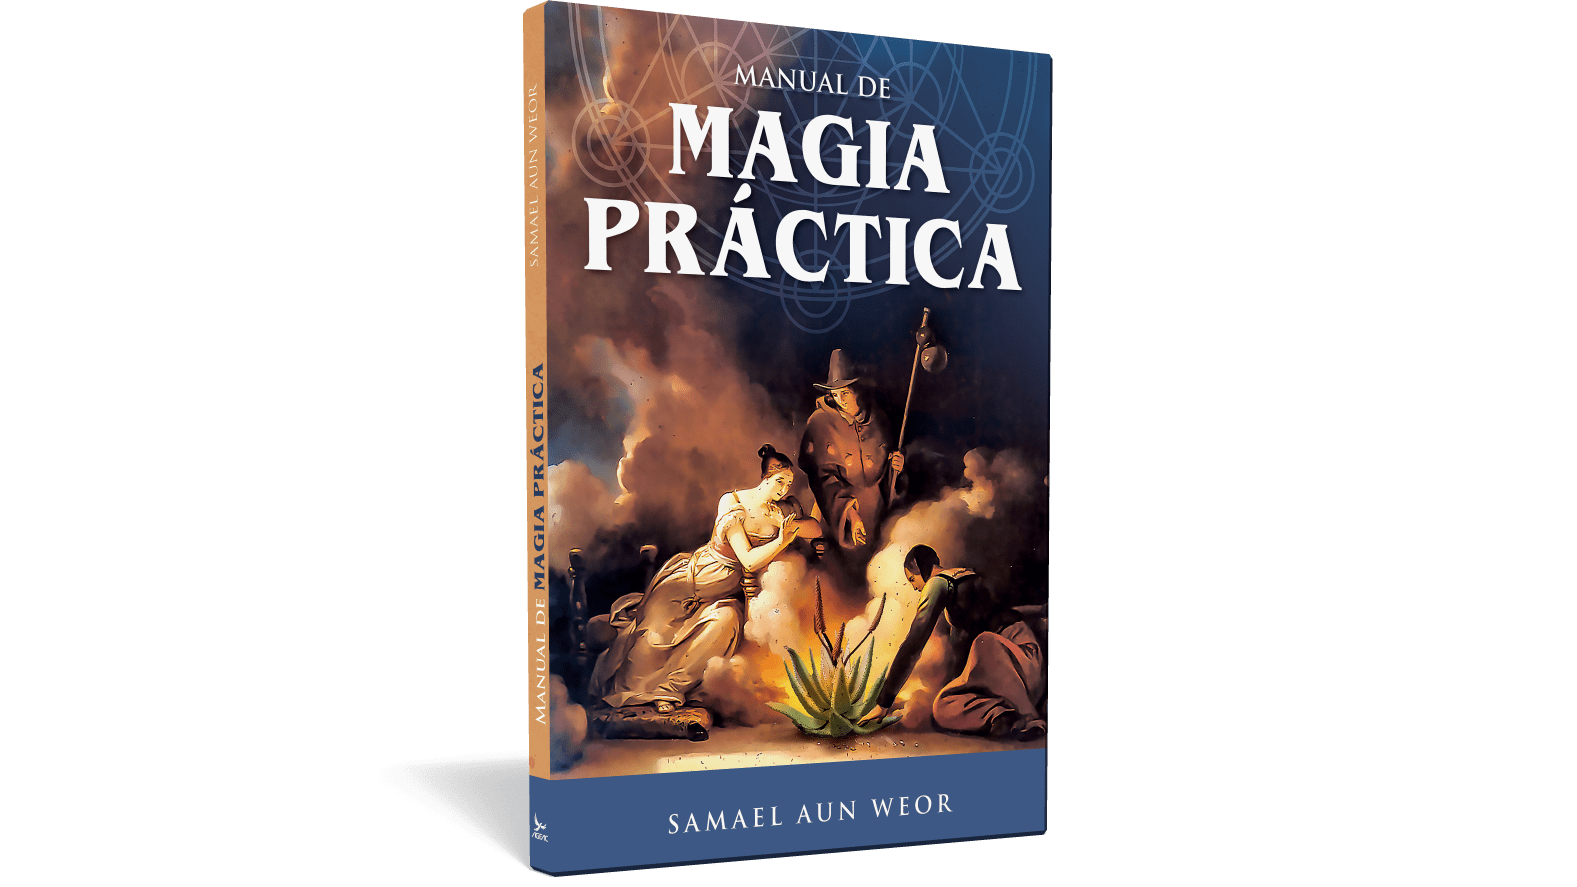 Gyakorlati mágia kézikönyv - V.M. Samael Aun Weor